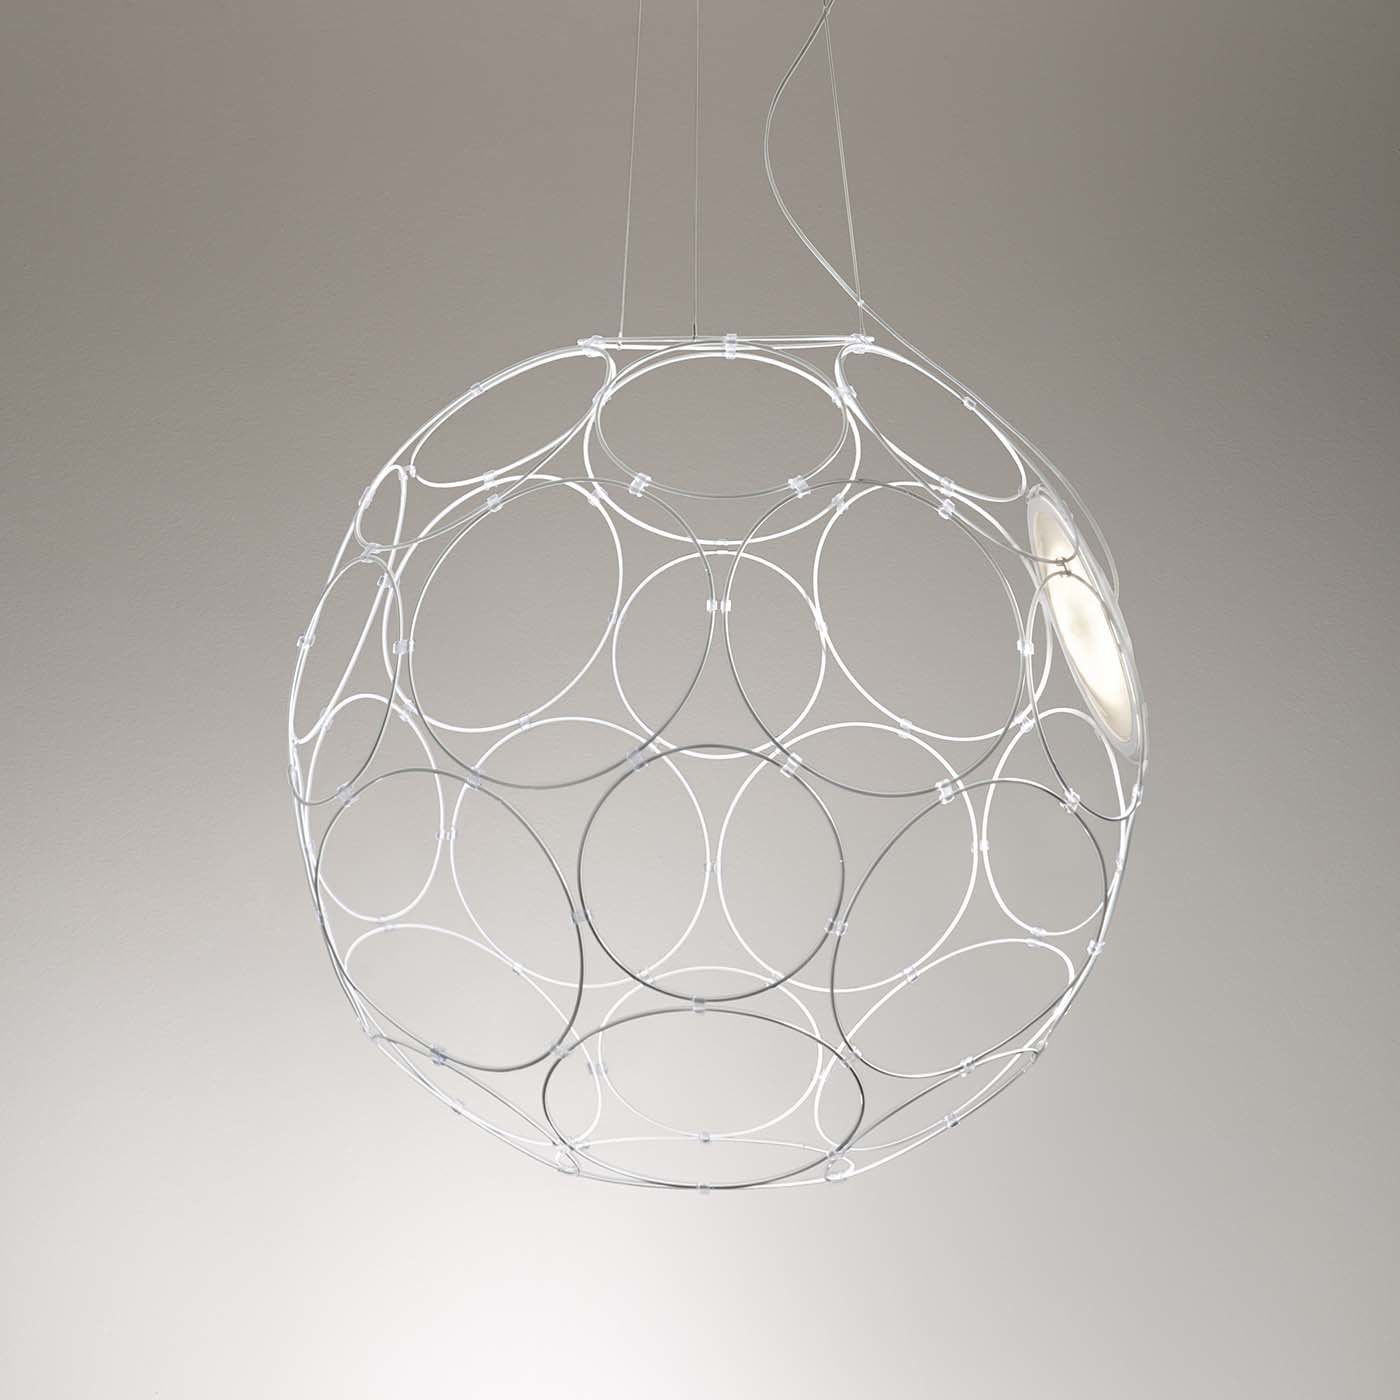 Giro White Pendant Lamp by Formfjord Studio - Alternative view 1